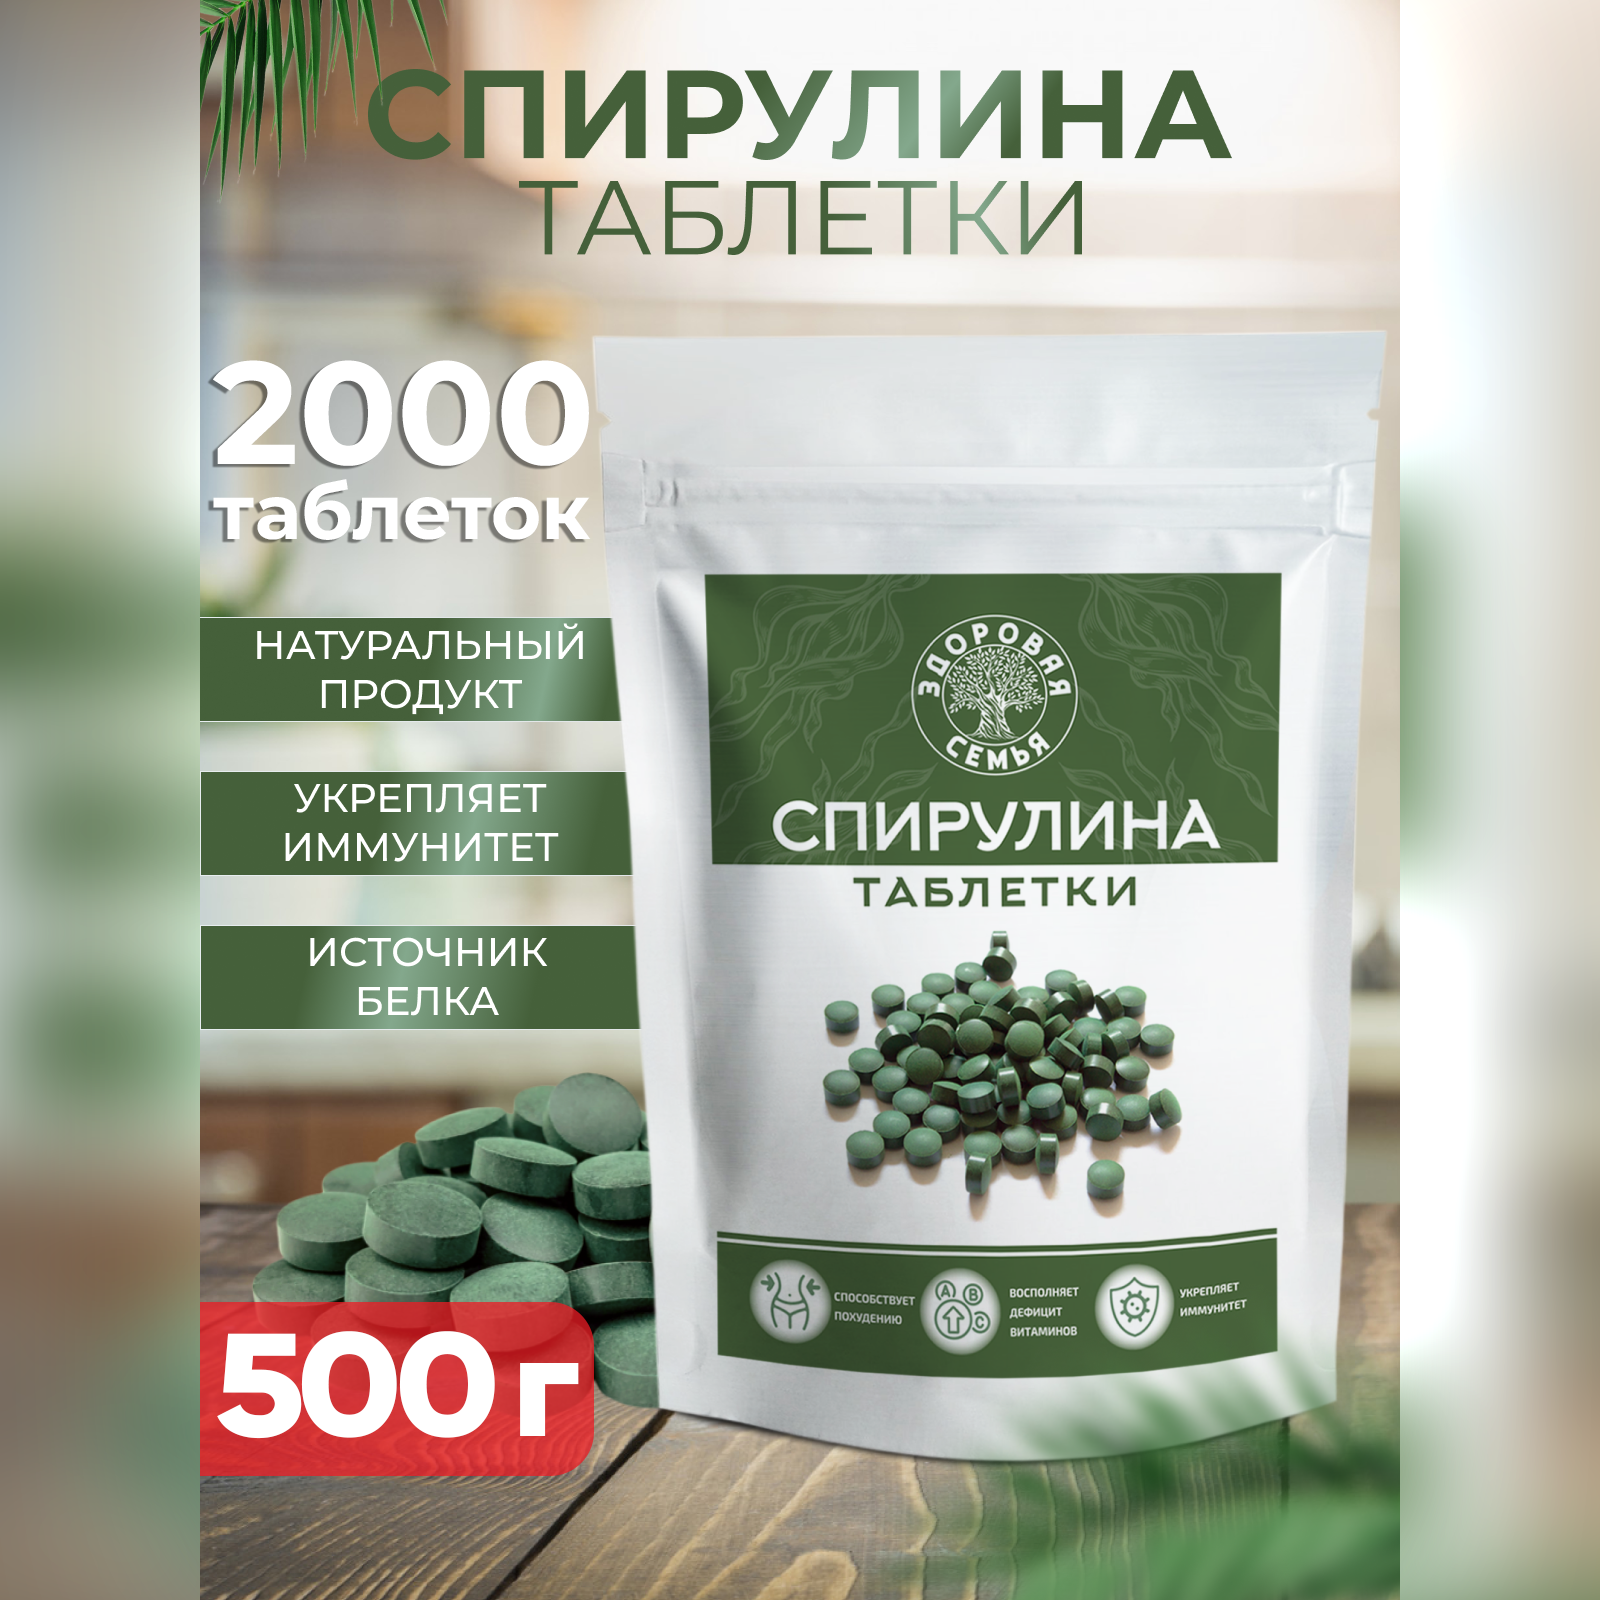 Спирулина в таблетках 2000 шт по 250 мг Здоровая Семья, 500 г